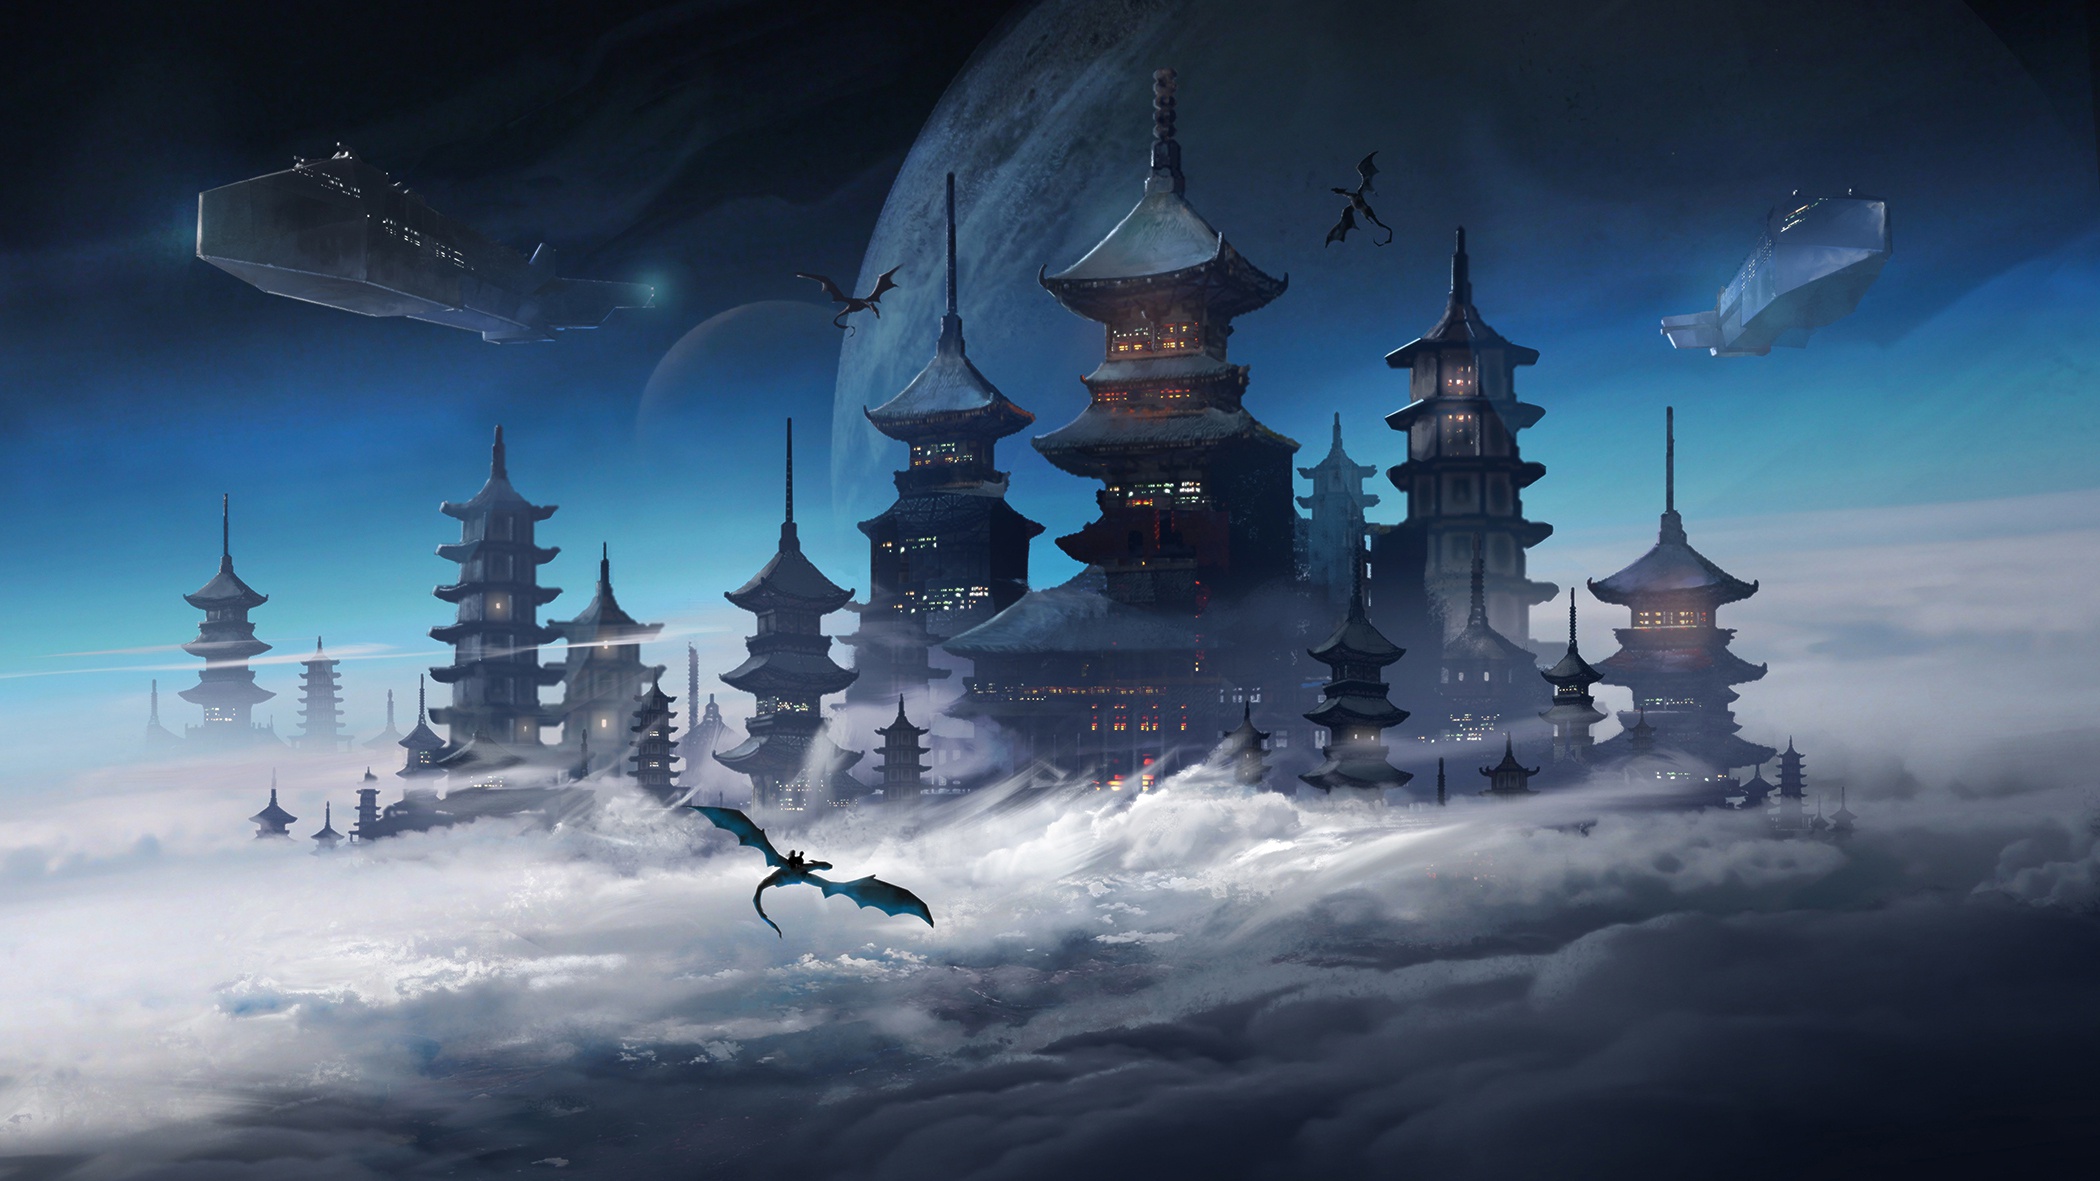 General 2100x1181 digital art castle fantasy art futuristic Asian architecture pagoda dragon spaceship planet clouds science fiction space Jordan Grimmer